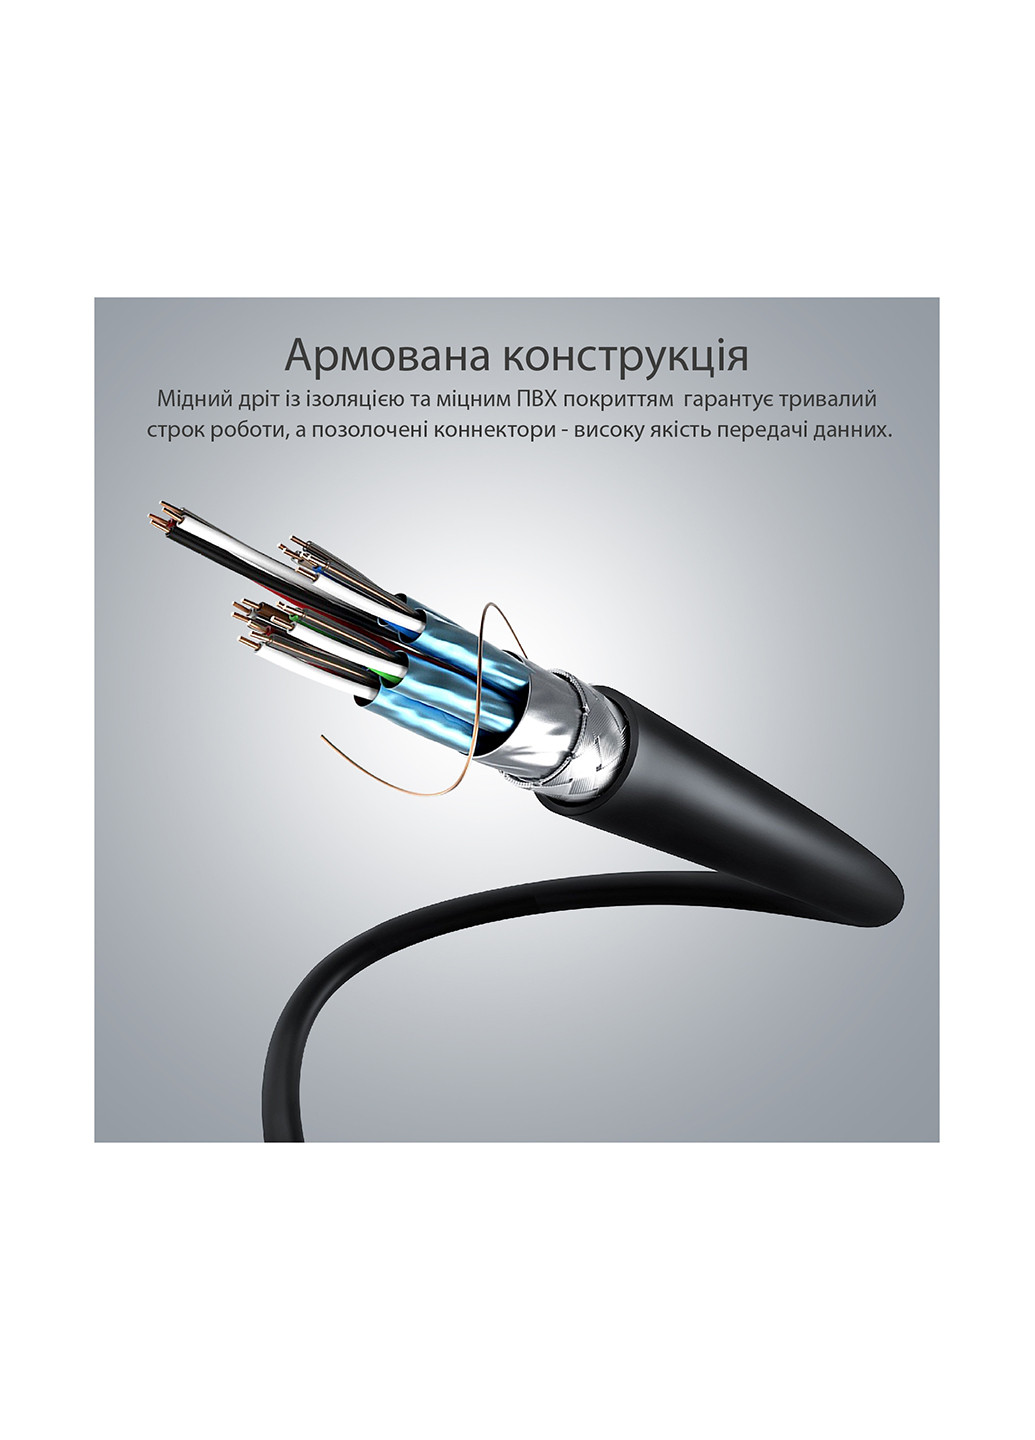 HDMI кабель Black Promate prolink4k2-150 (132703833)